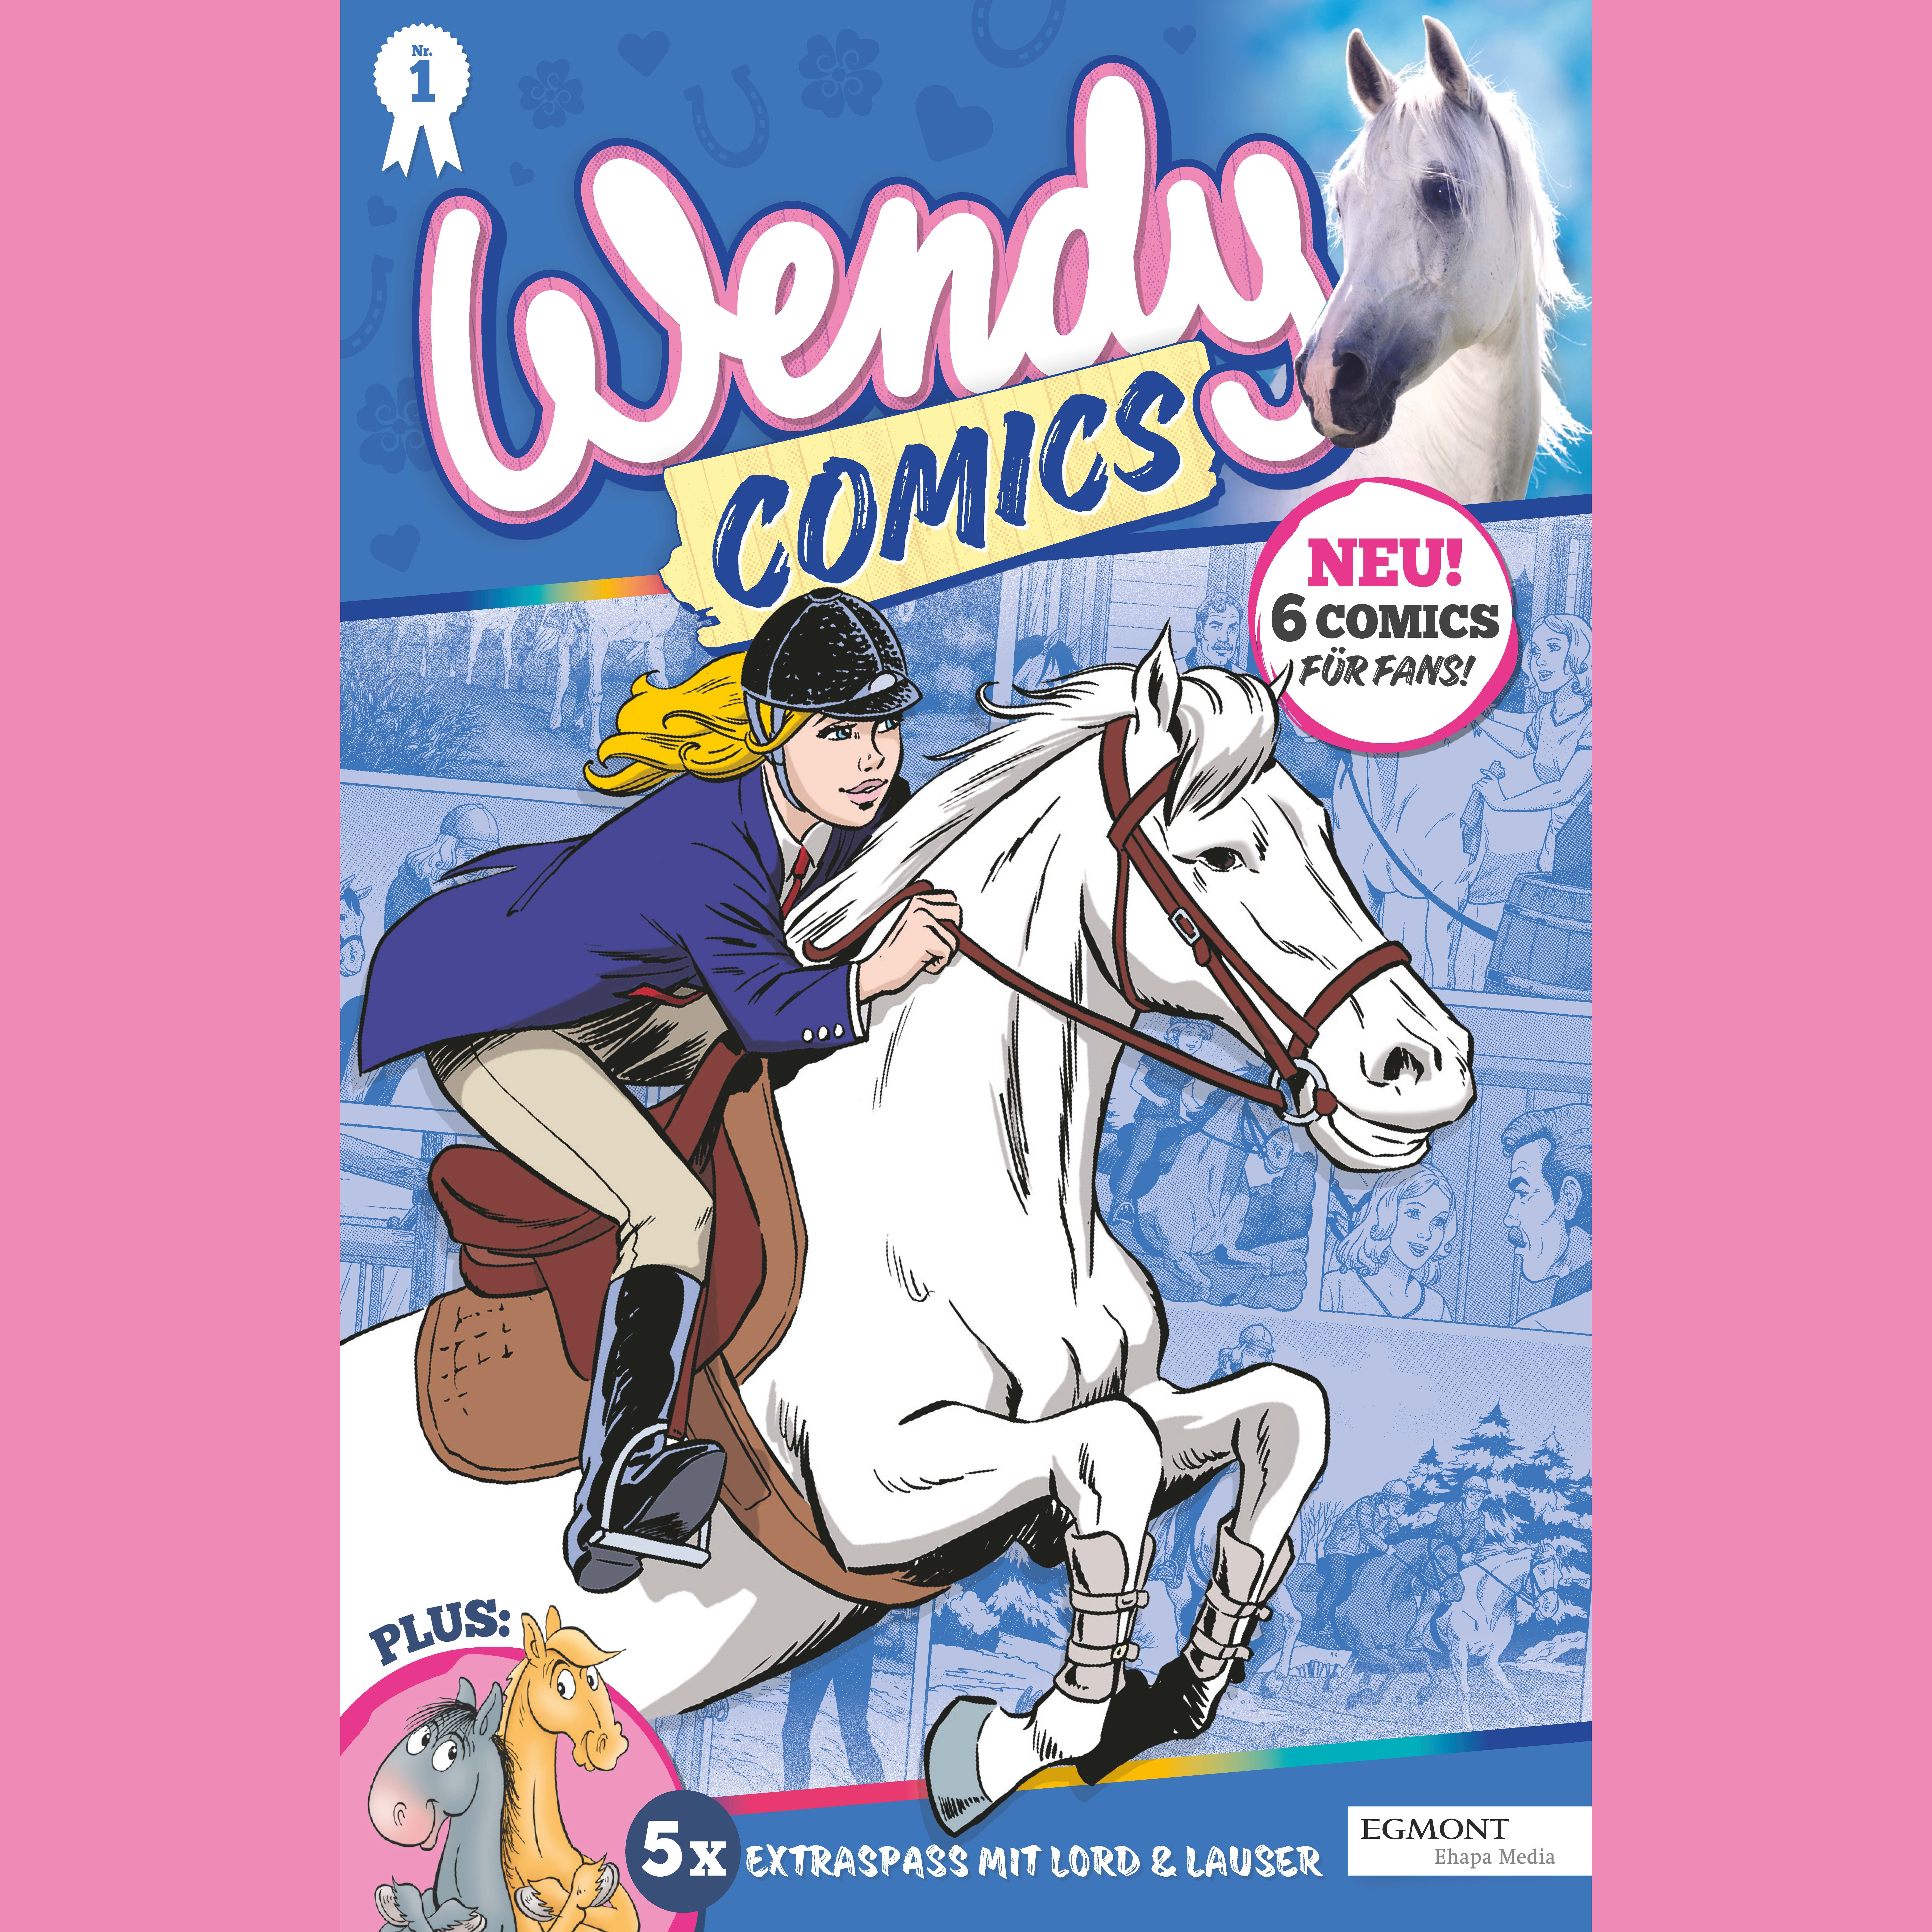 Egmont Ehapa Media präsentiert die besten Comics aus „Wendy“